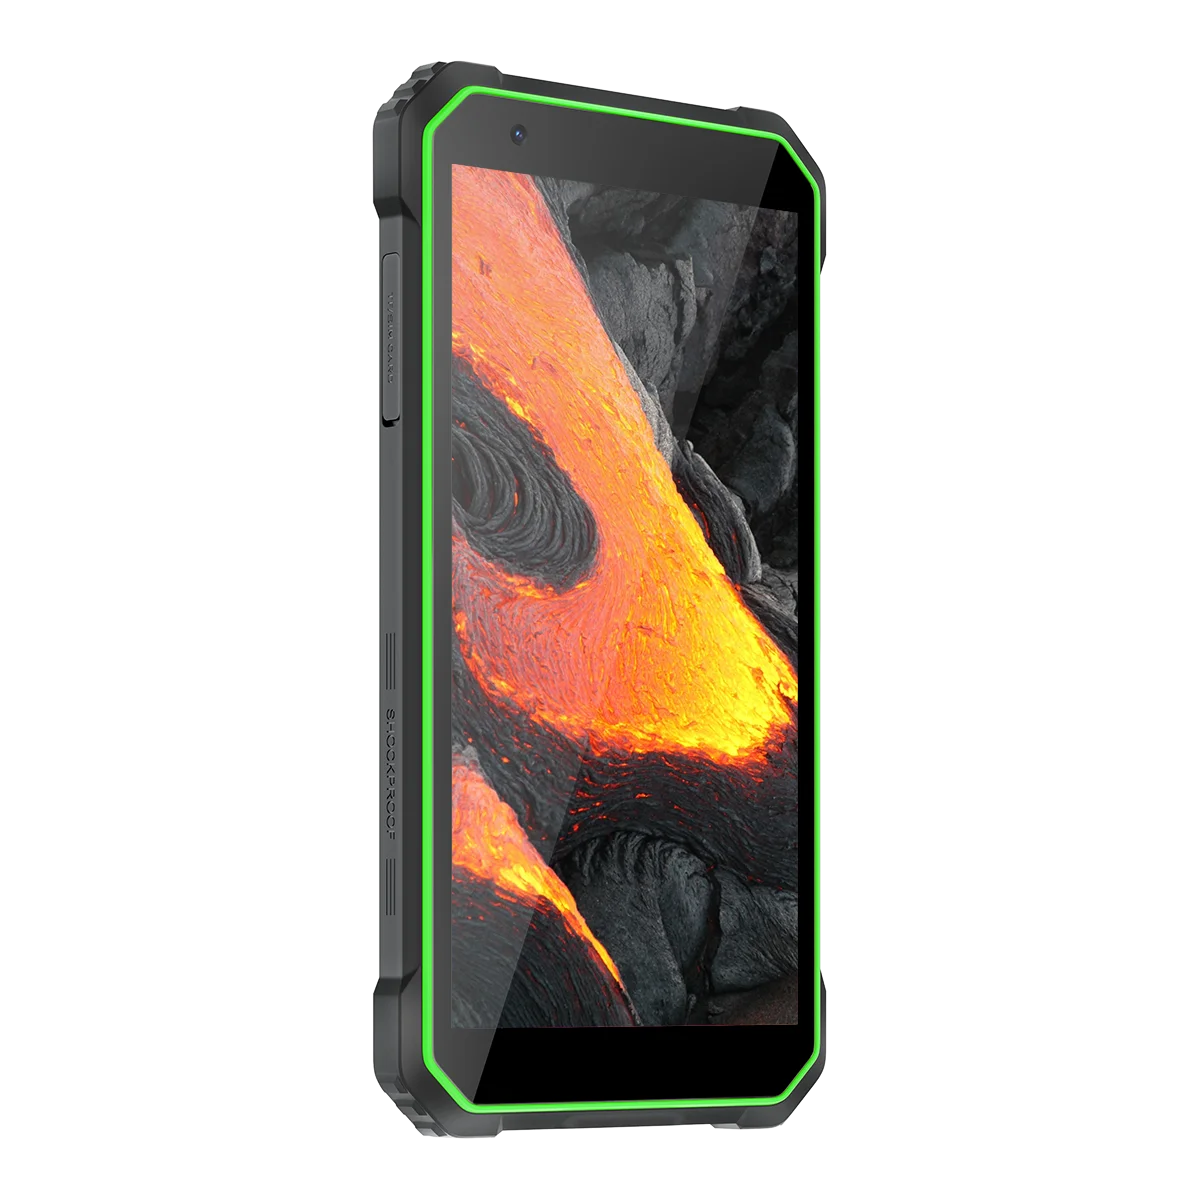 

Global Original OSCAL S60Pro Explosion-proof 4GB+32GB 5.7 inch Waterproof Mobile Phone, Black / green/orange